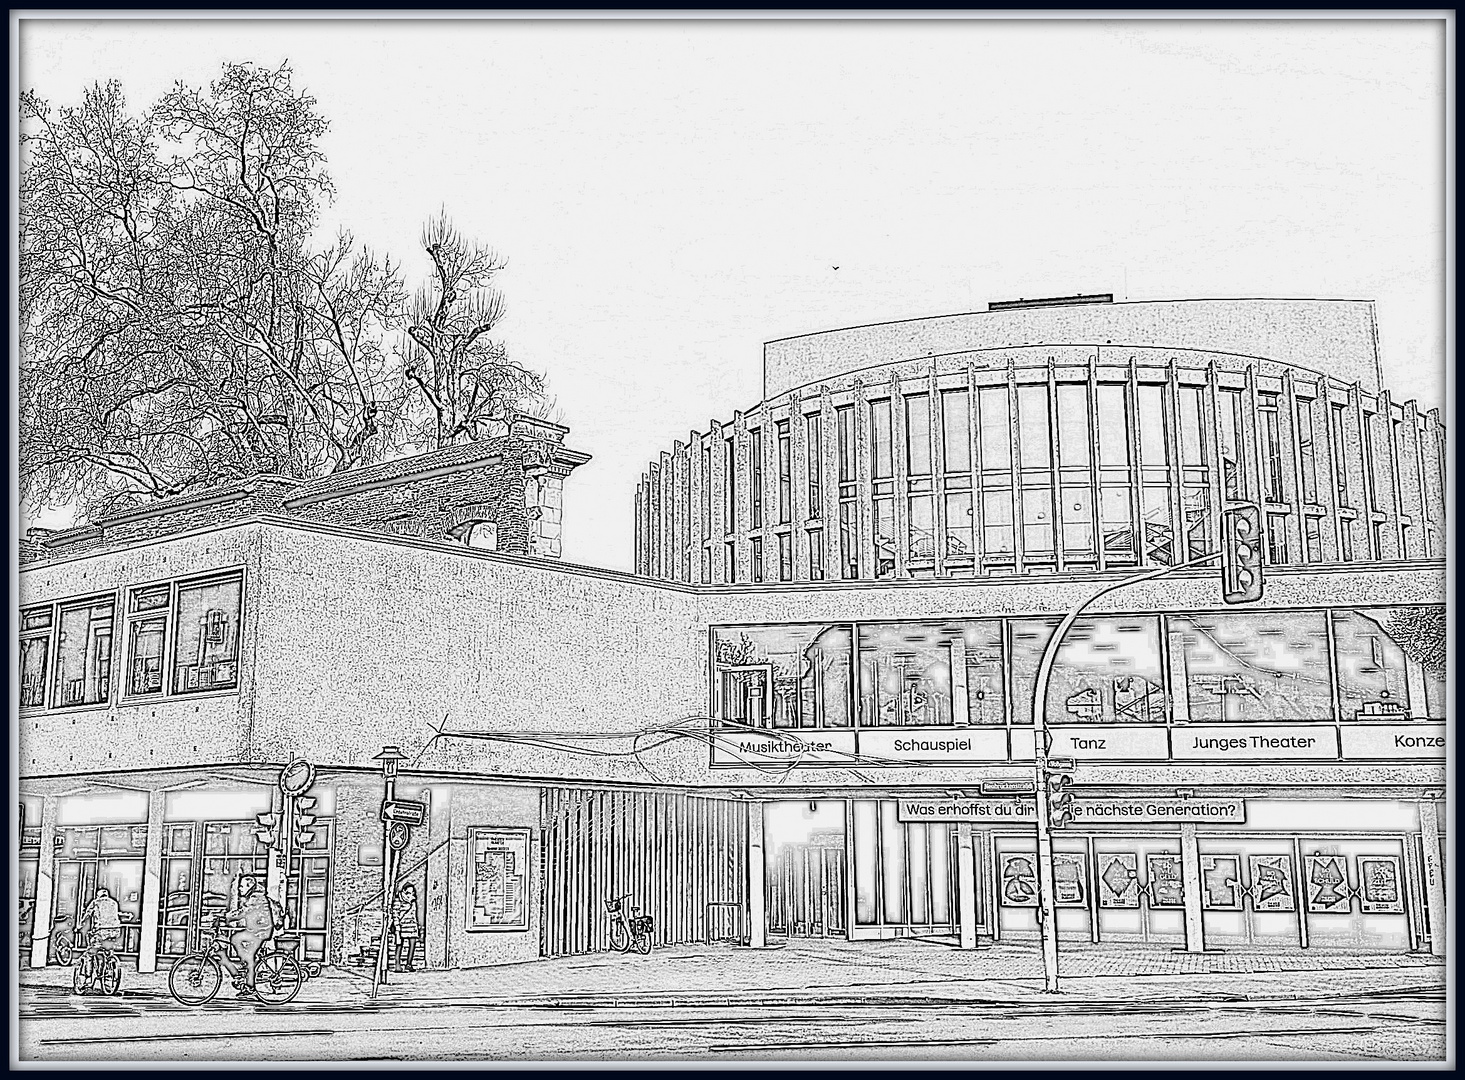 Theater Münster